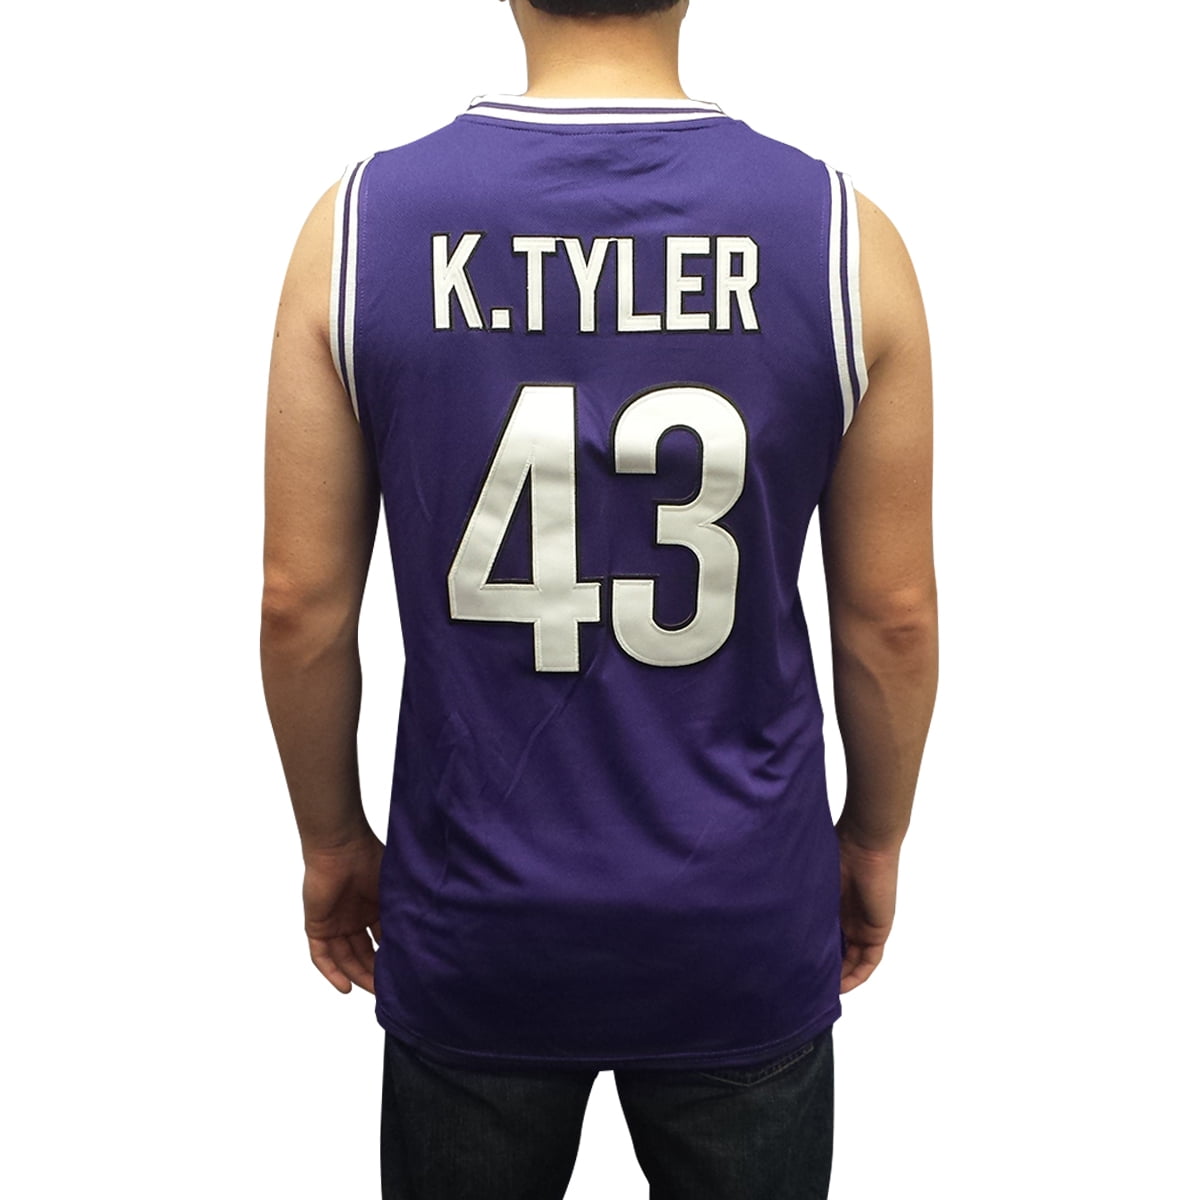 Kenny Tyler #43 Huskies Purple Basketball Jersey The 6th Man